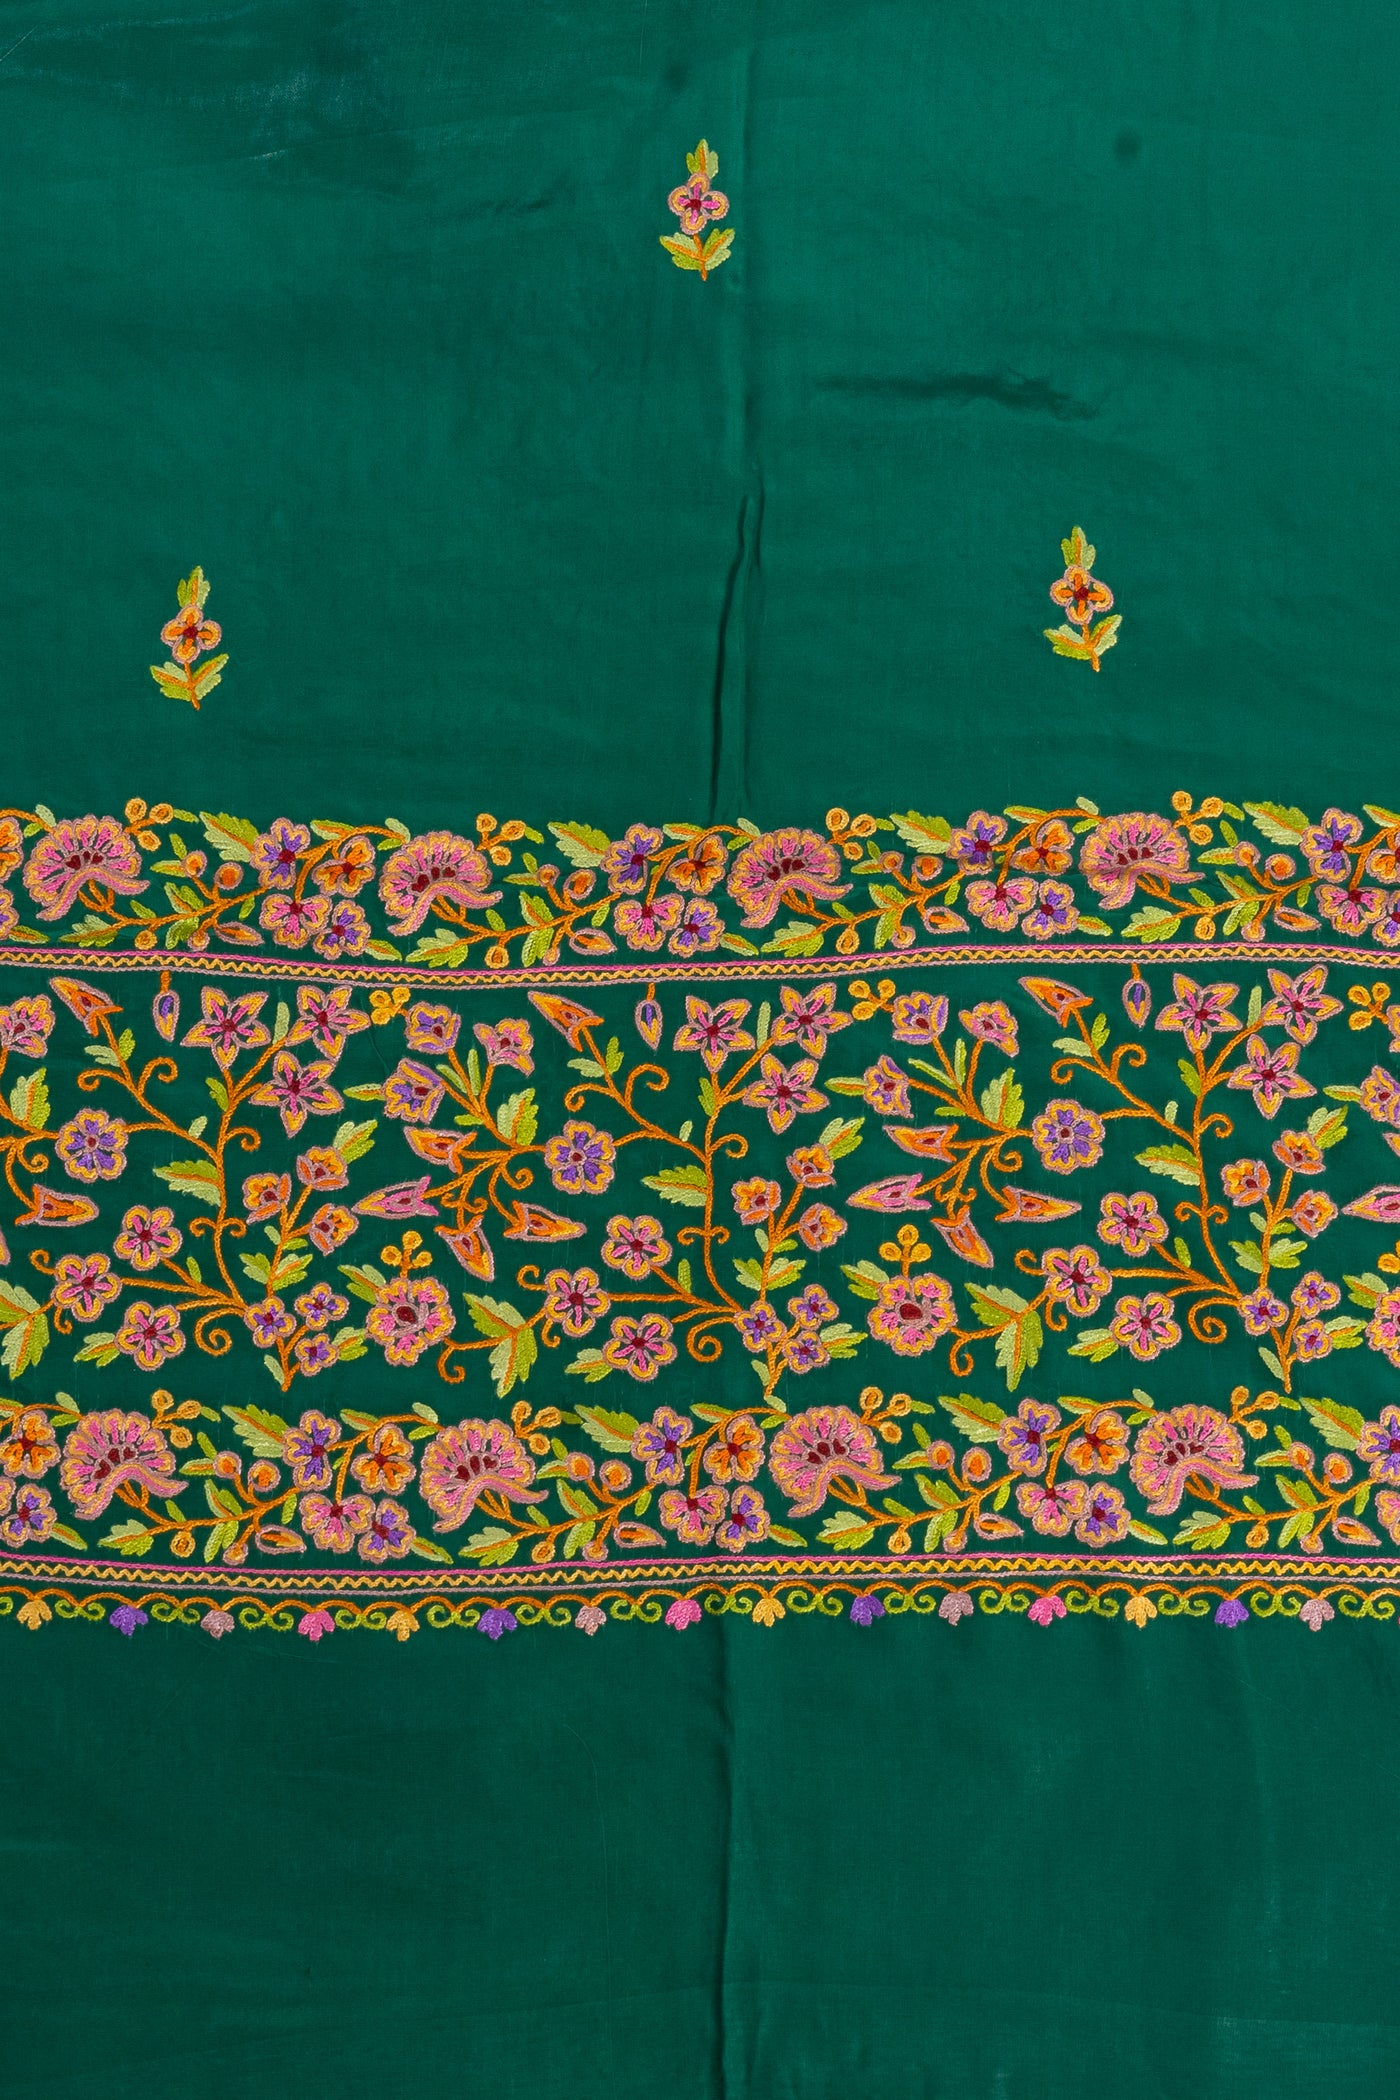 Artisanal Teal Green Kashmiri Saree with Exquisite Hand Aari Embroidery